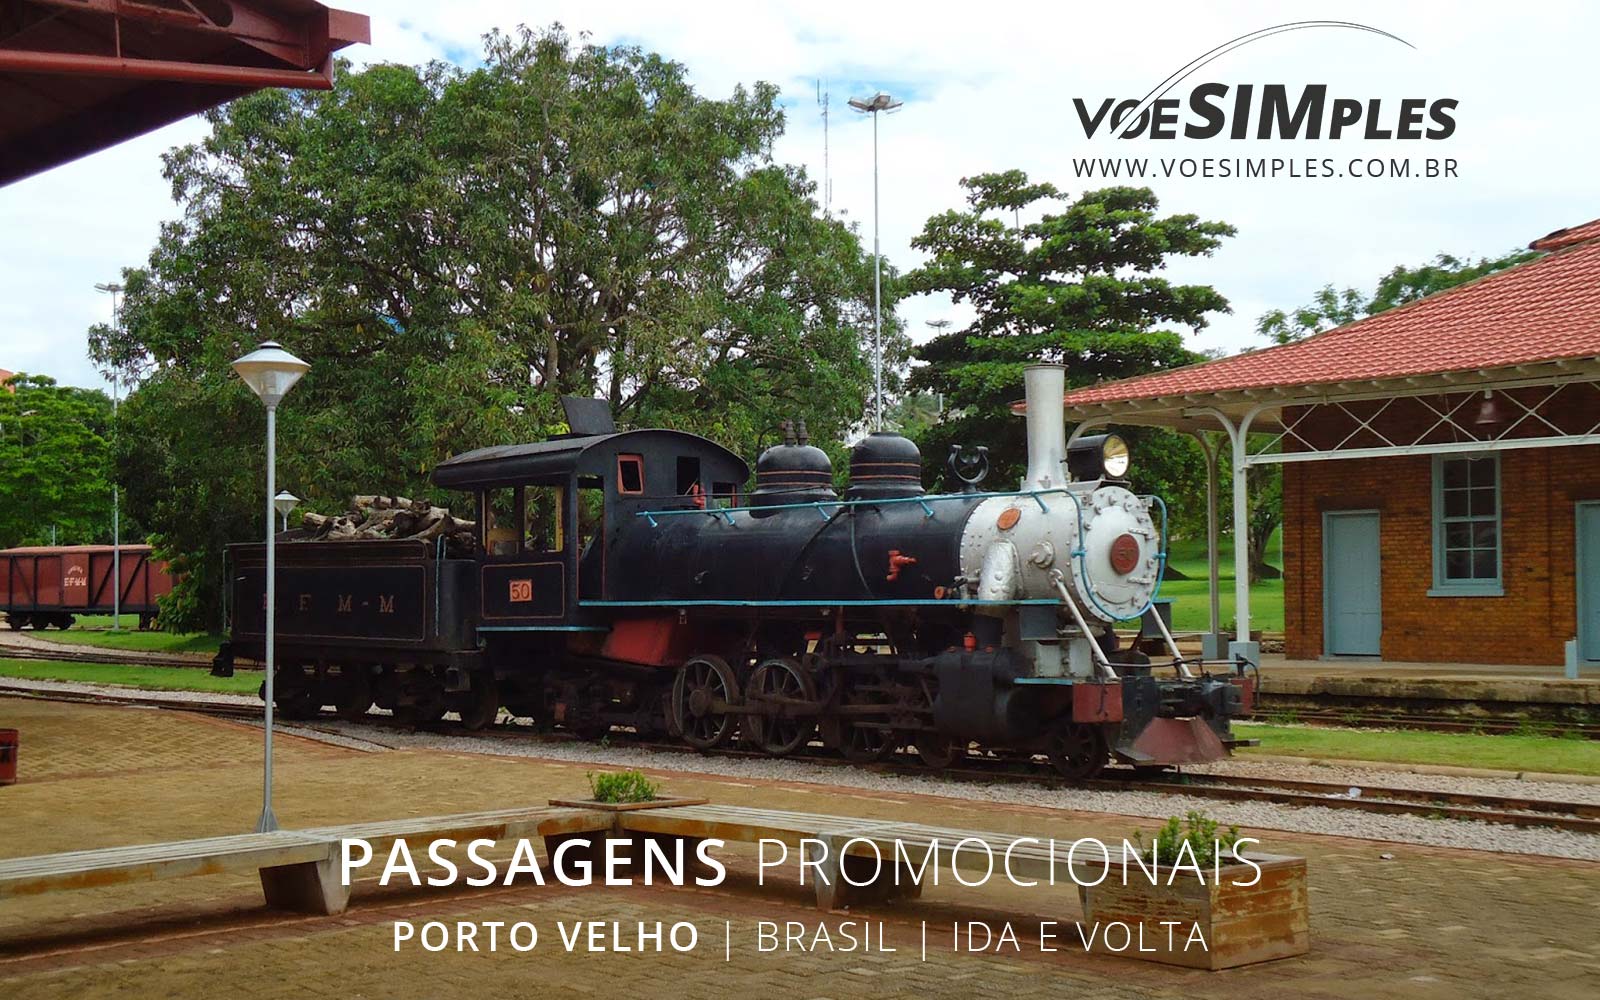 passagens-aereas-baratas-porto-velho-rondonia-brasil-voe-simples-passages-aereas-promocionais-rondonia-passagens-promo-porto-velho